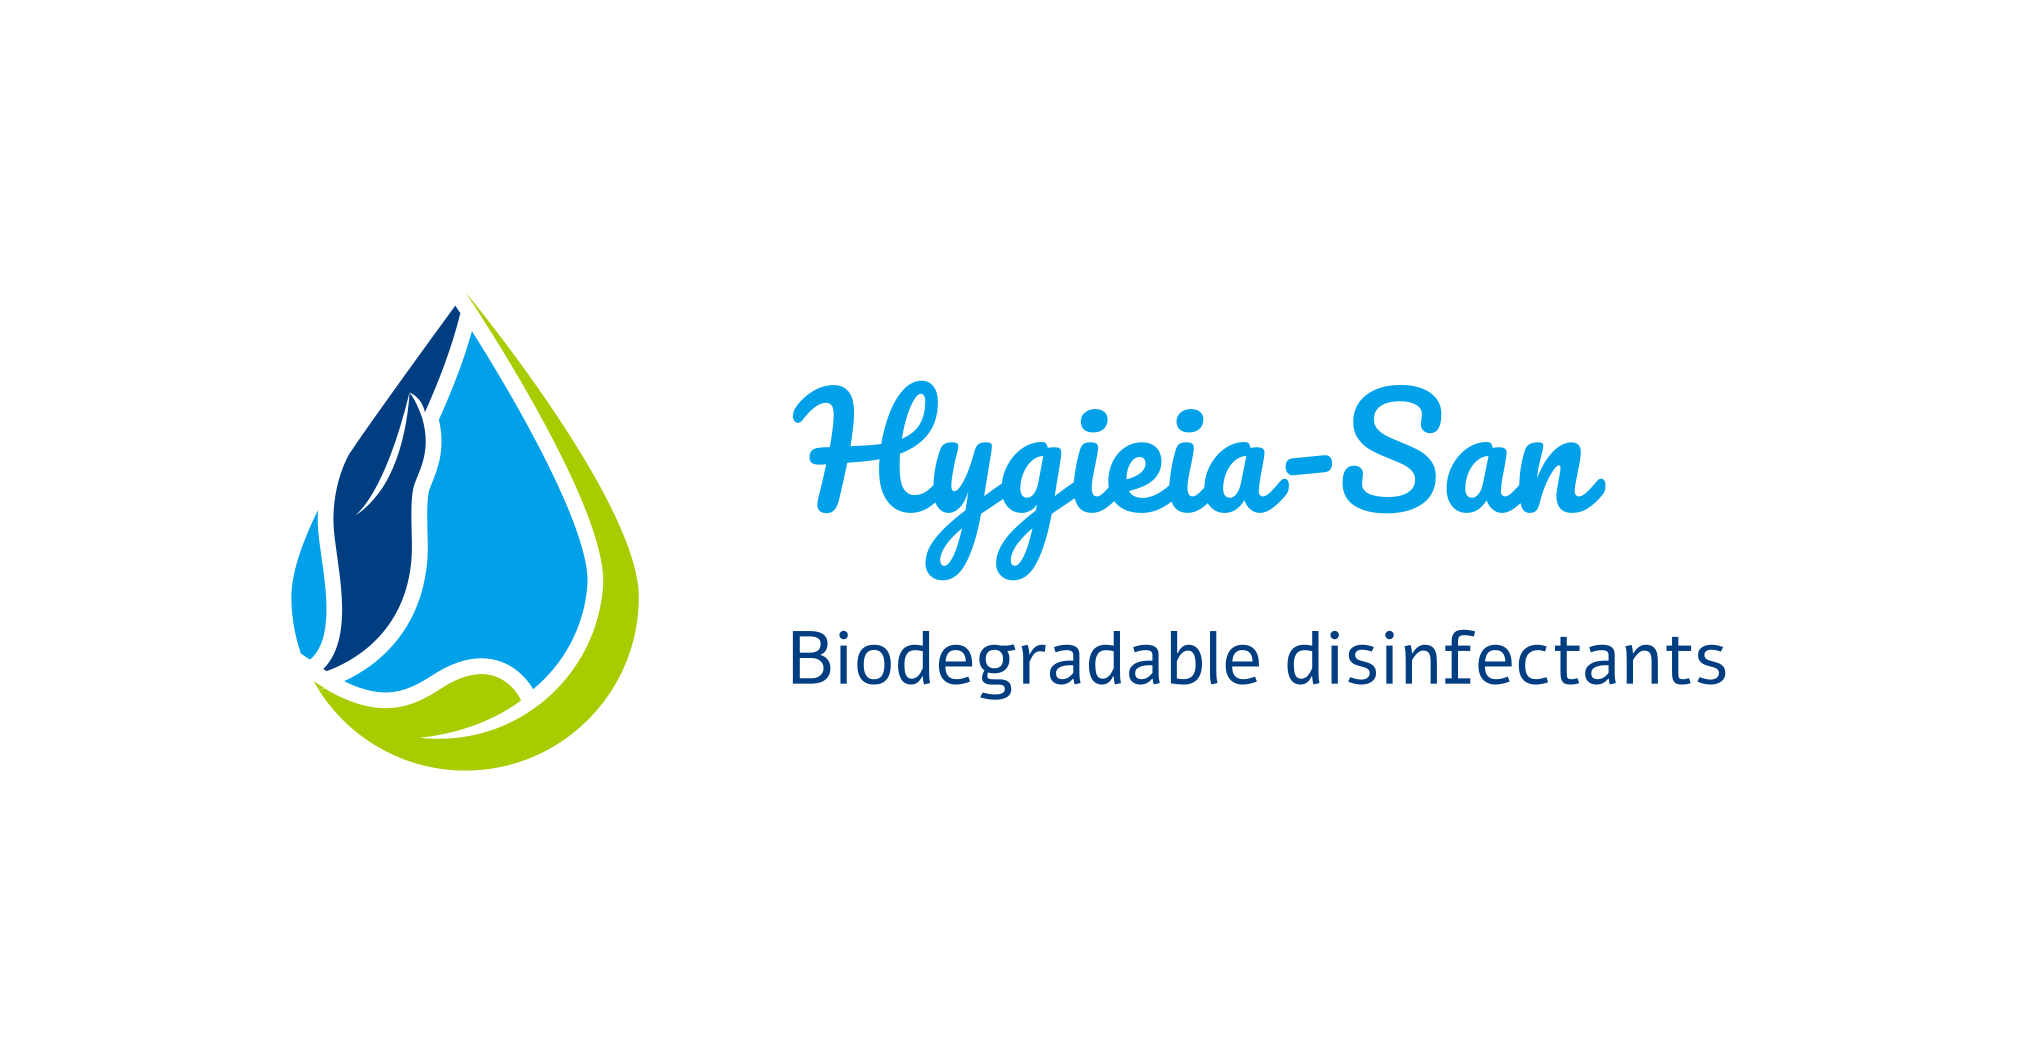 Hygieia-San